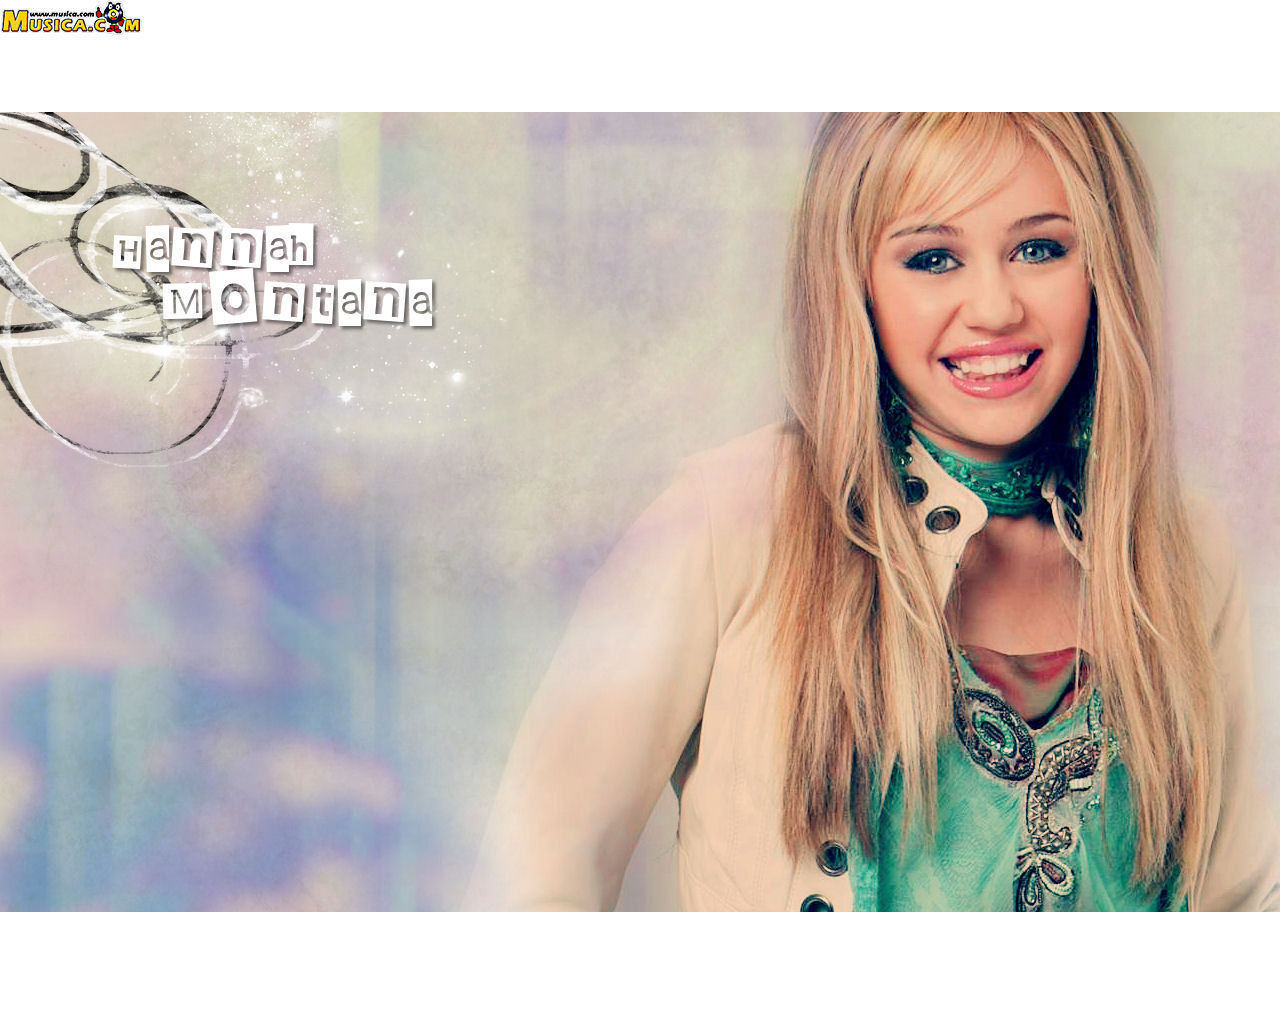 Hannah Montana Image HD Wallpaper And Background